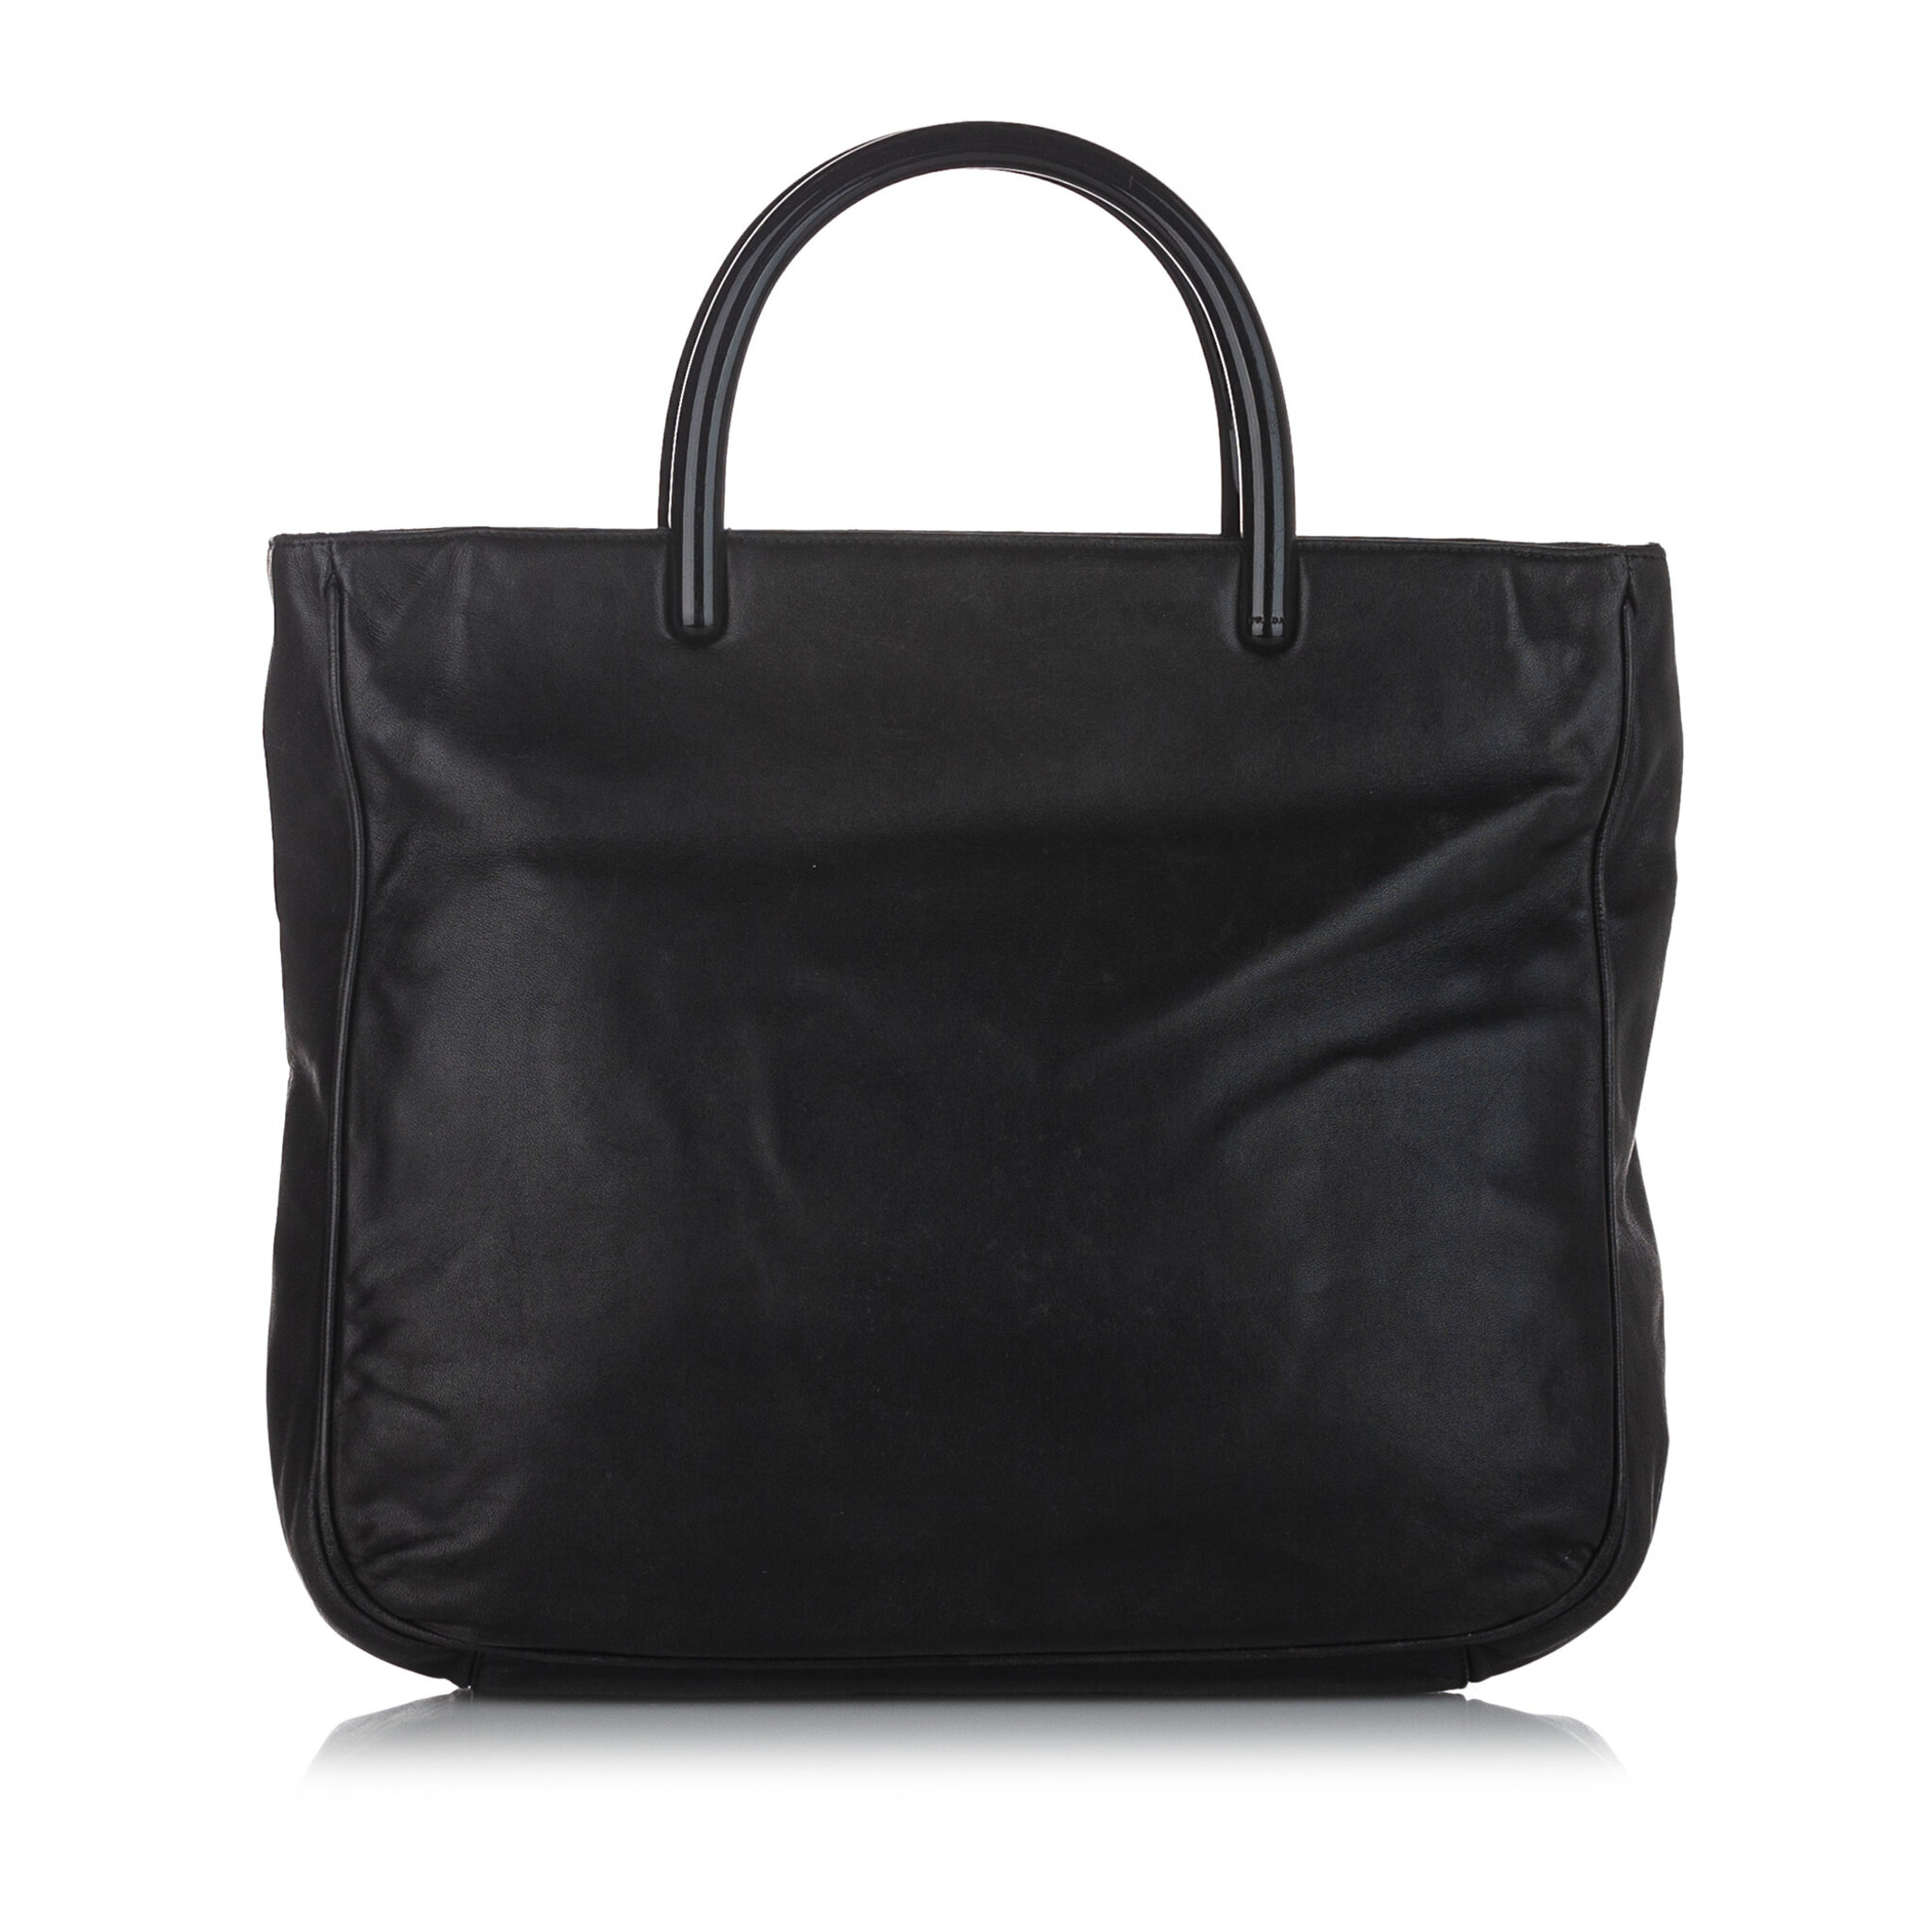 Prada Leather Handbag, ONESIZE, black